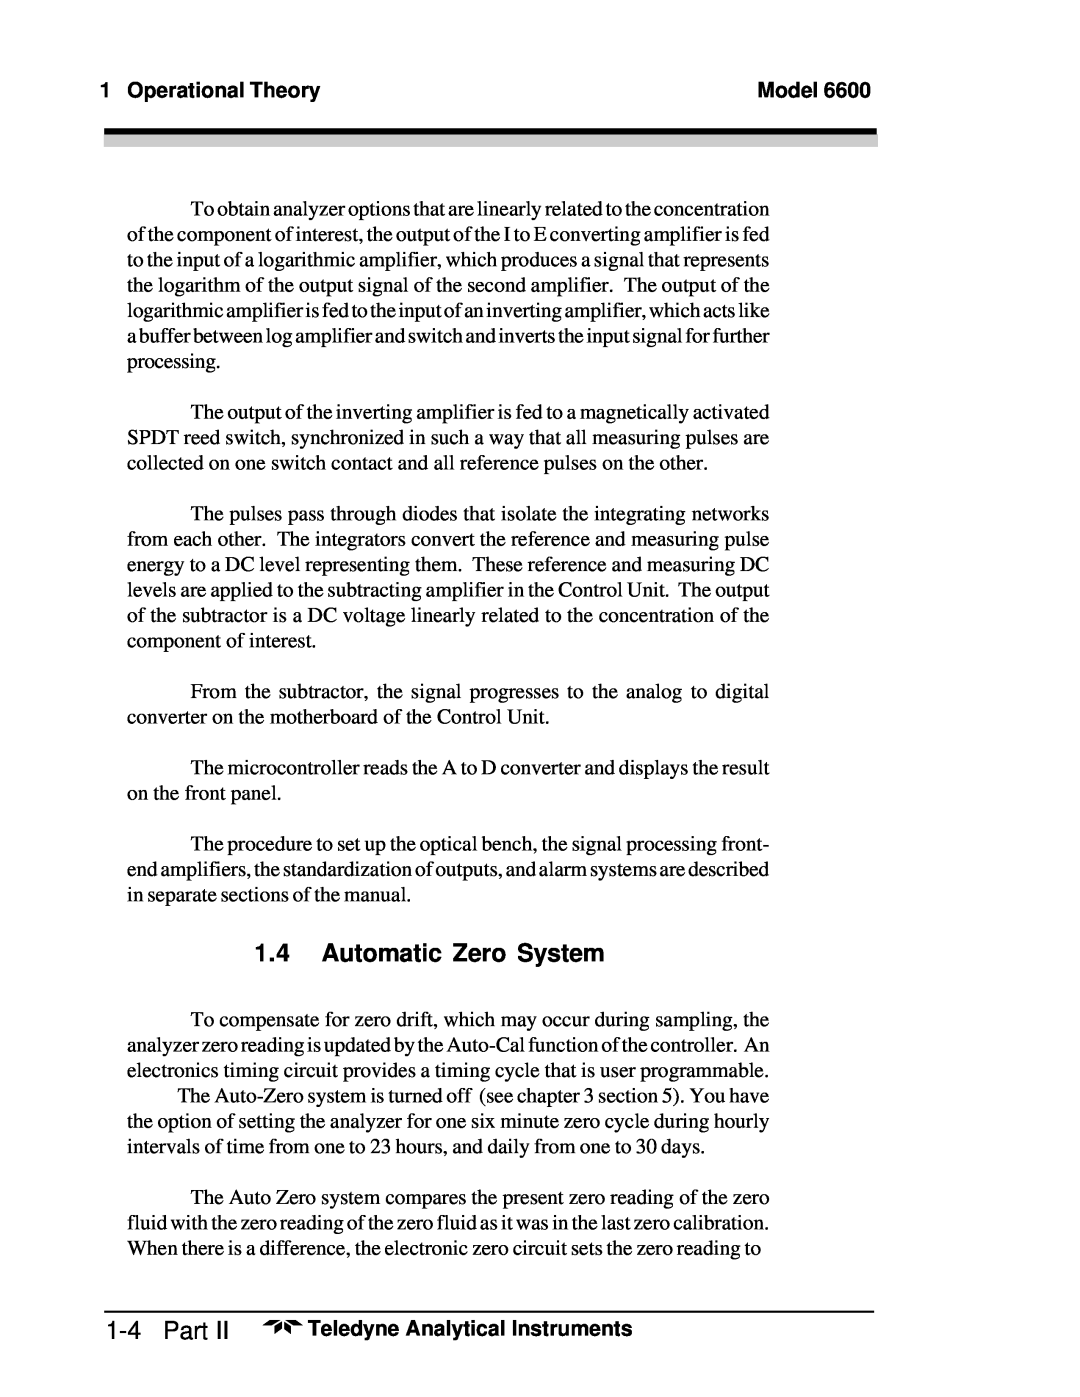 Teledyne 6600 manual 1.4Automatic Zero System, 1-4Part, Operational Theory, Model, Teledyne Analytical Instruments 